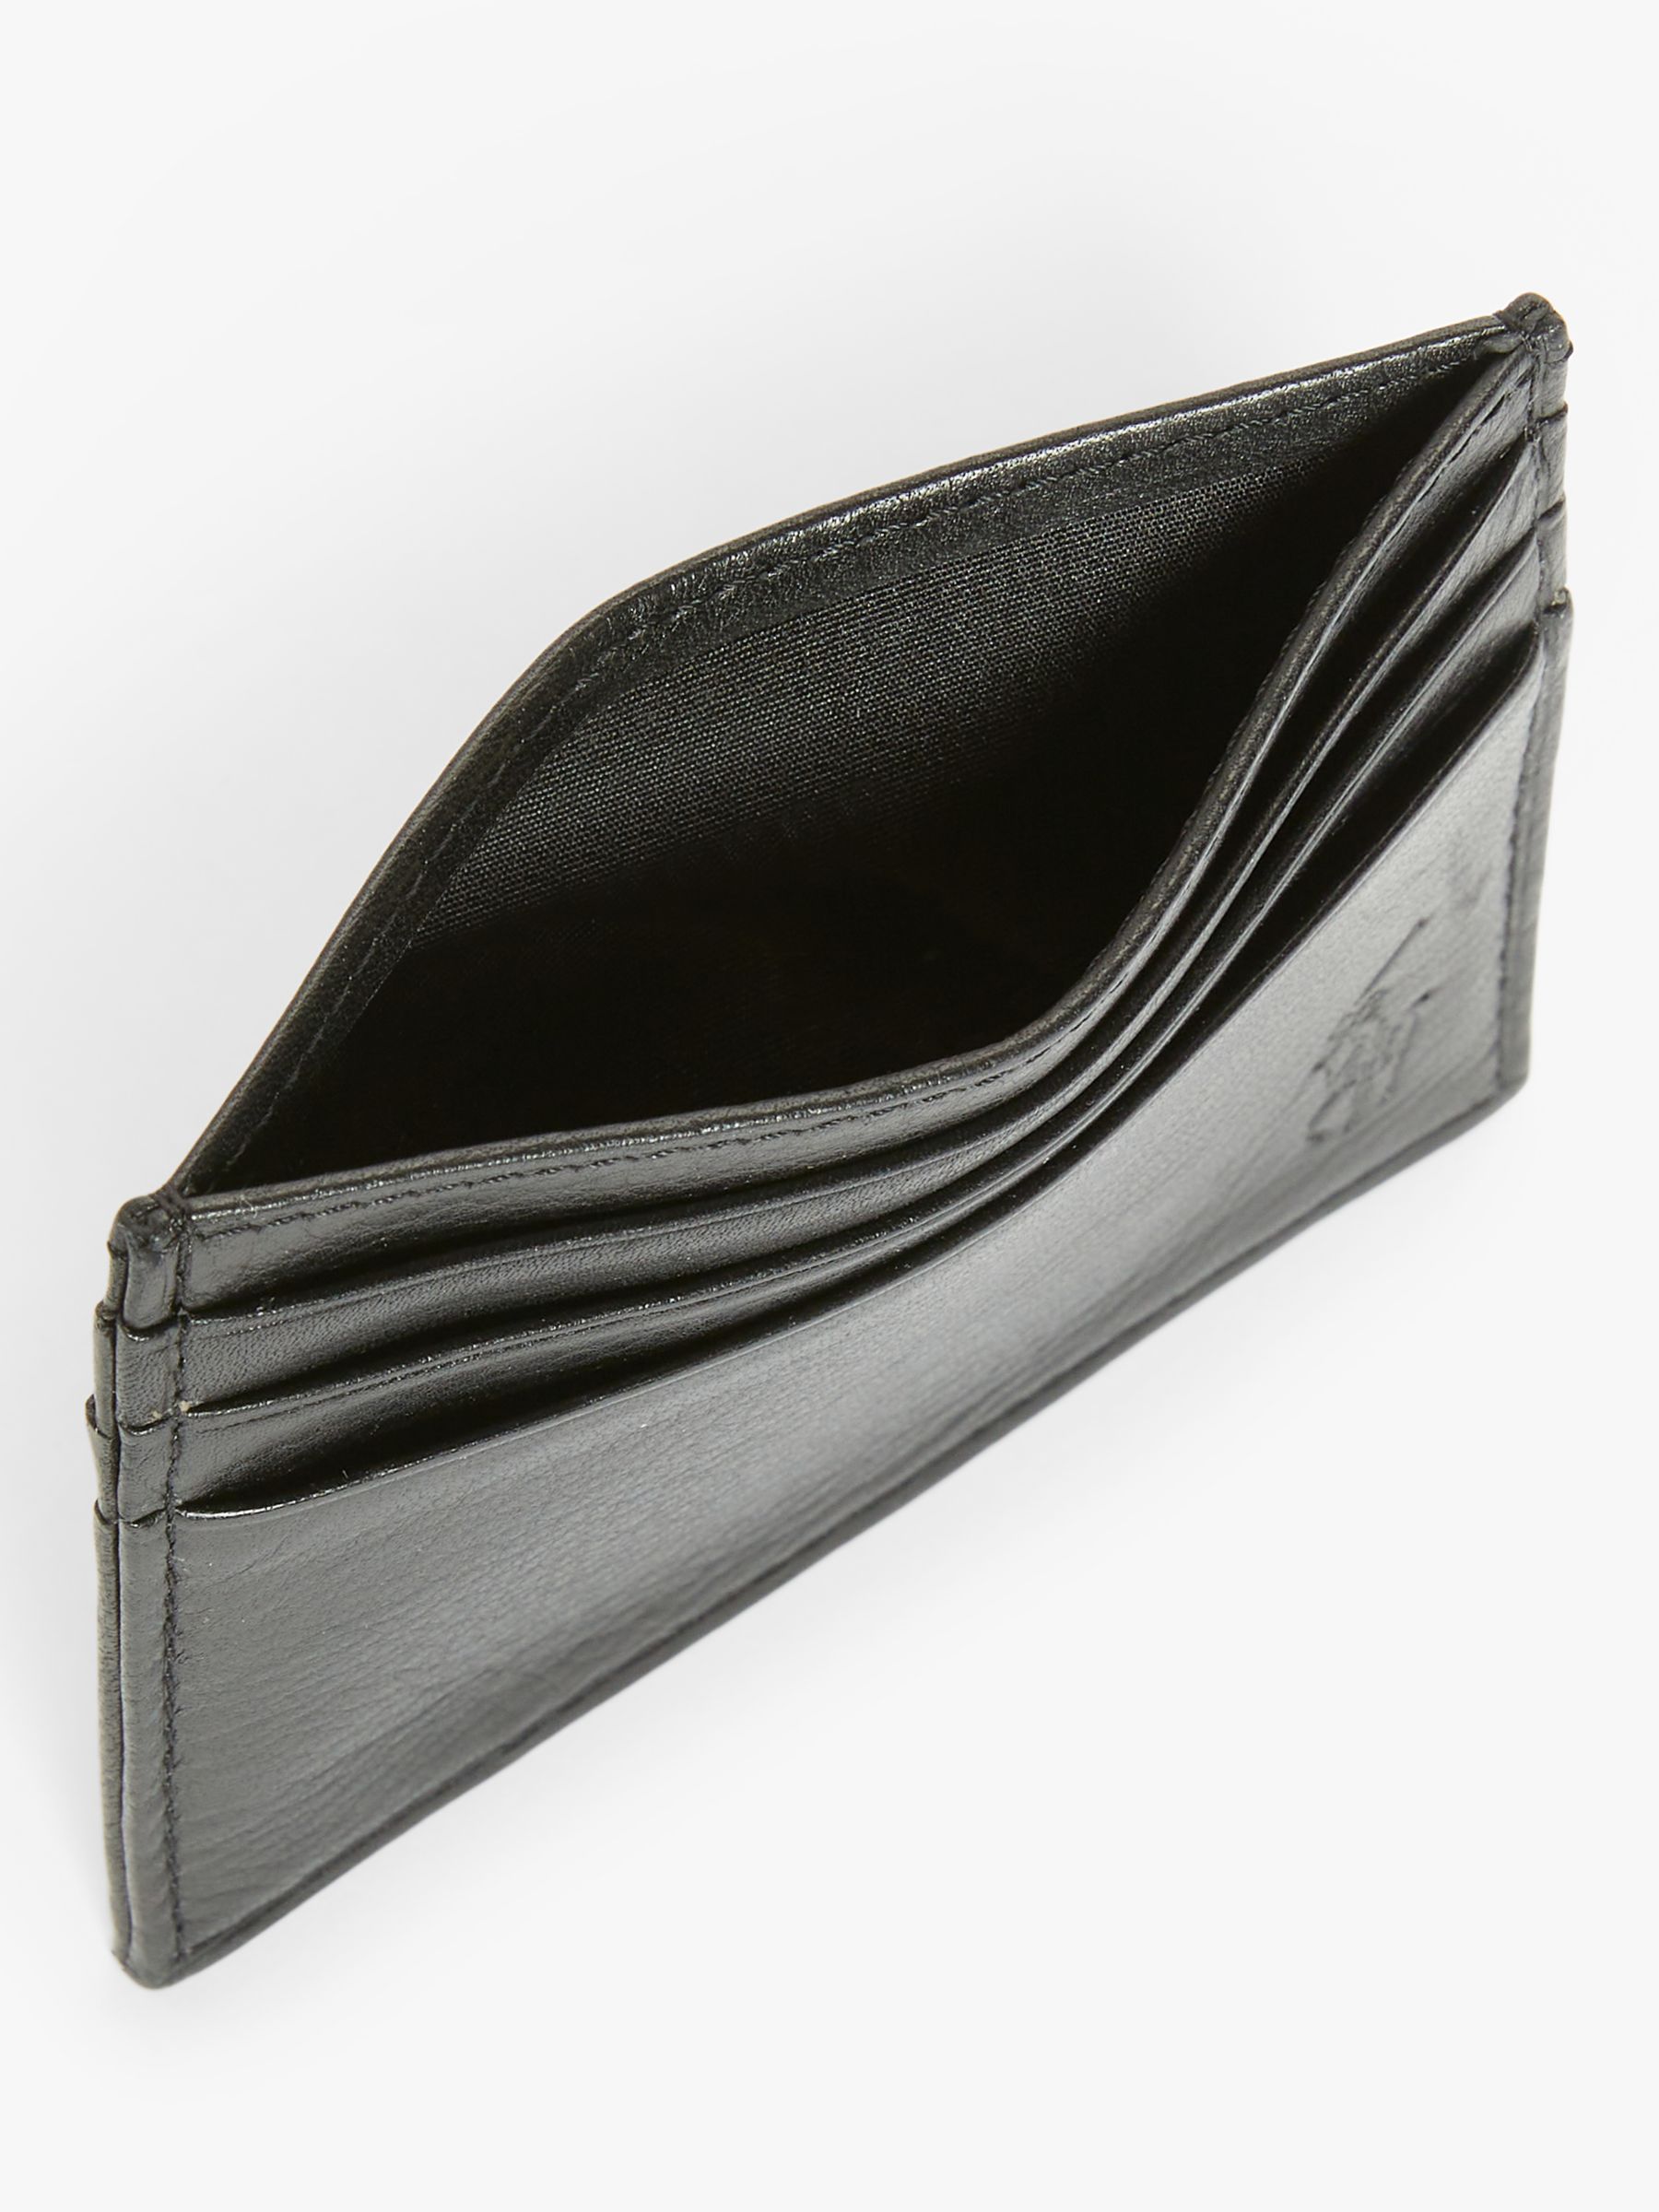 Polo Ralph Lauren Pebble Leather Card Holder, Black at John Lewis & Partners